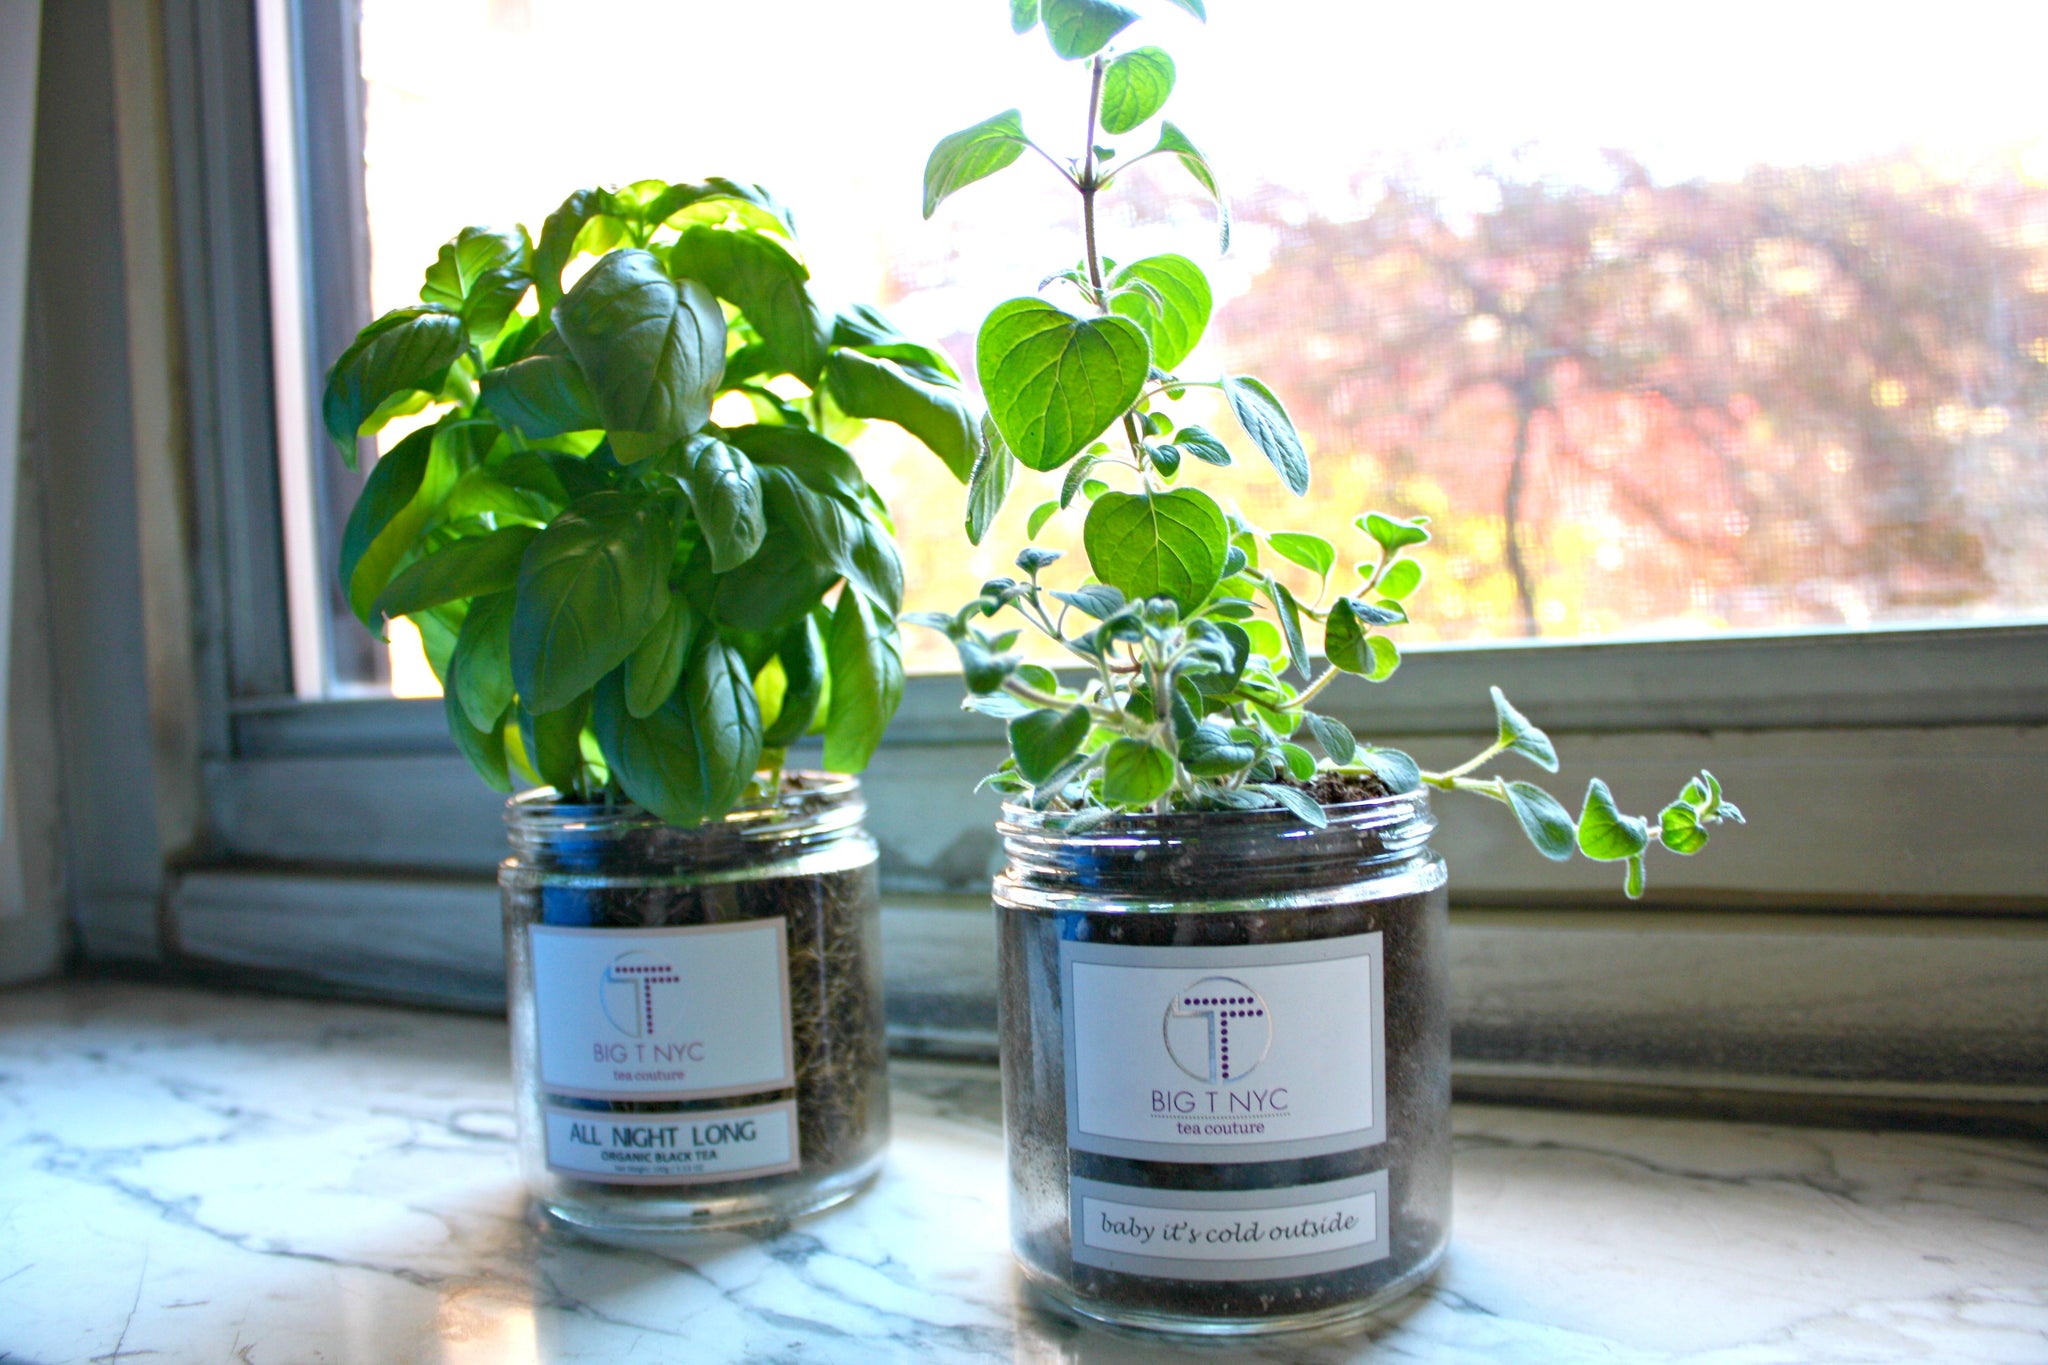 Repurpose and Reuse Big T NYC glass jars